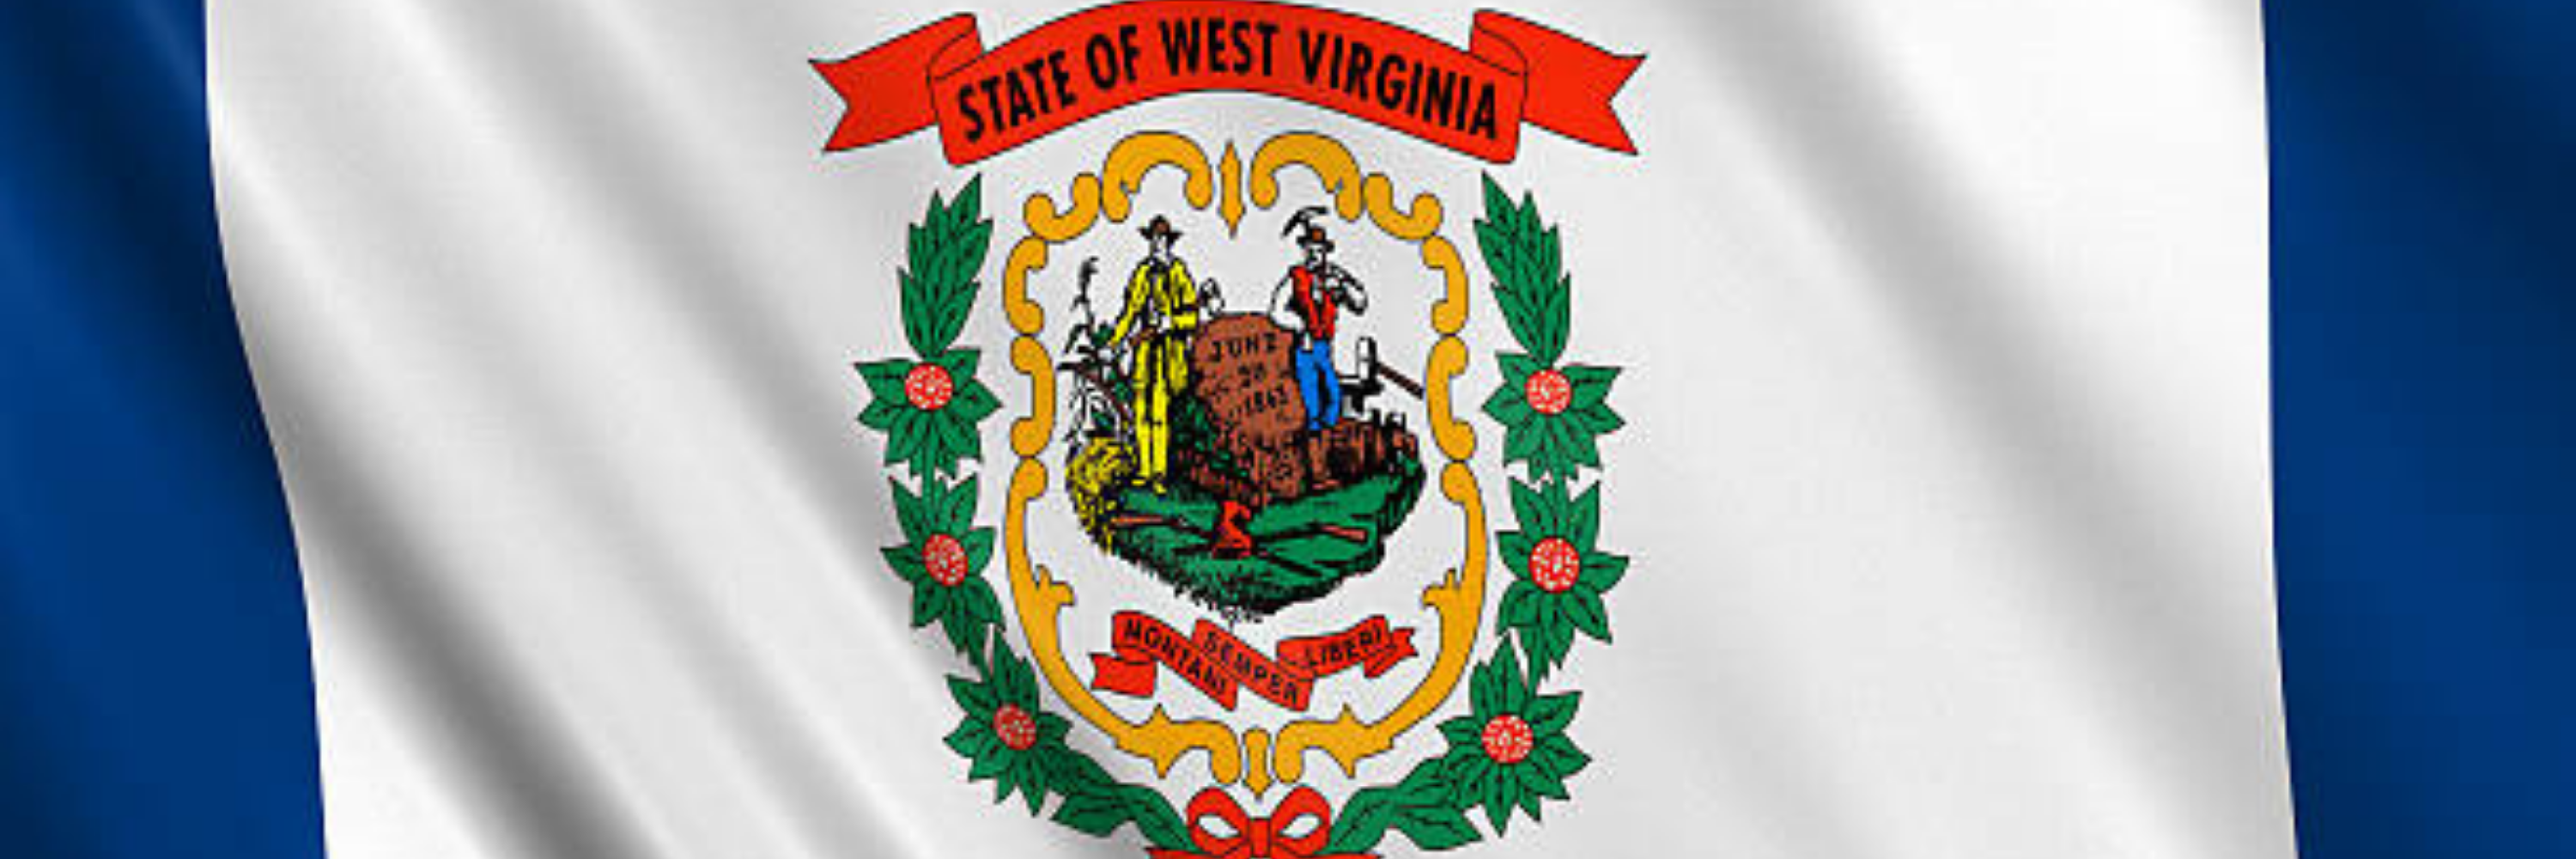 West Virginia Brady List